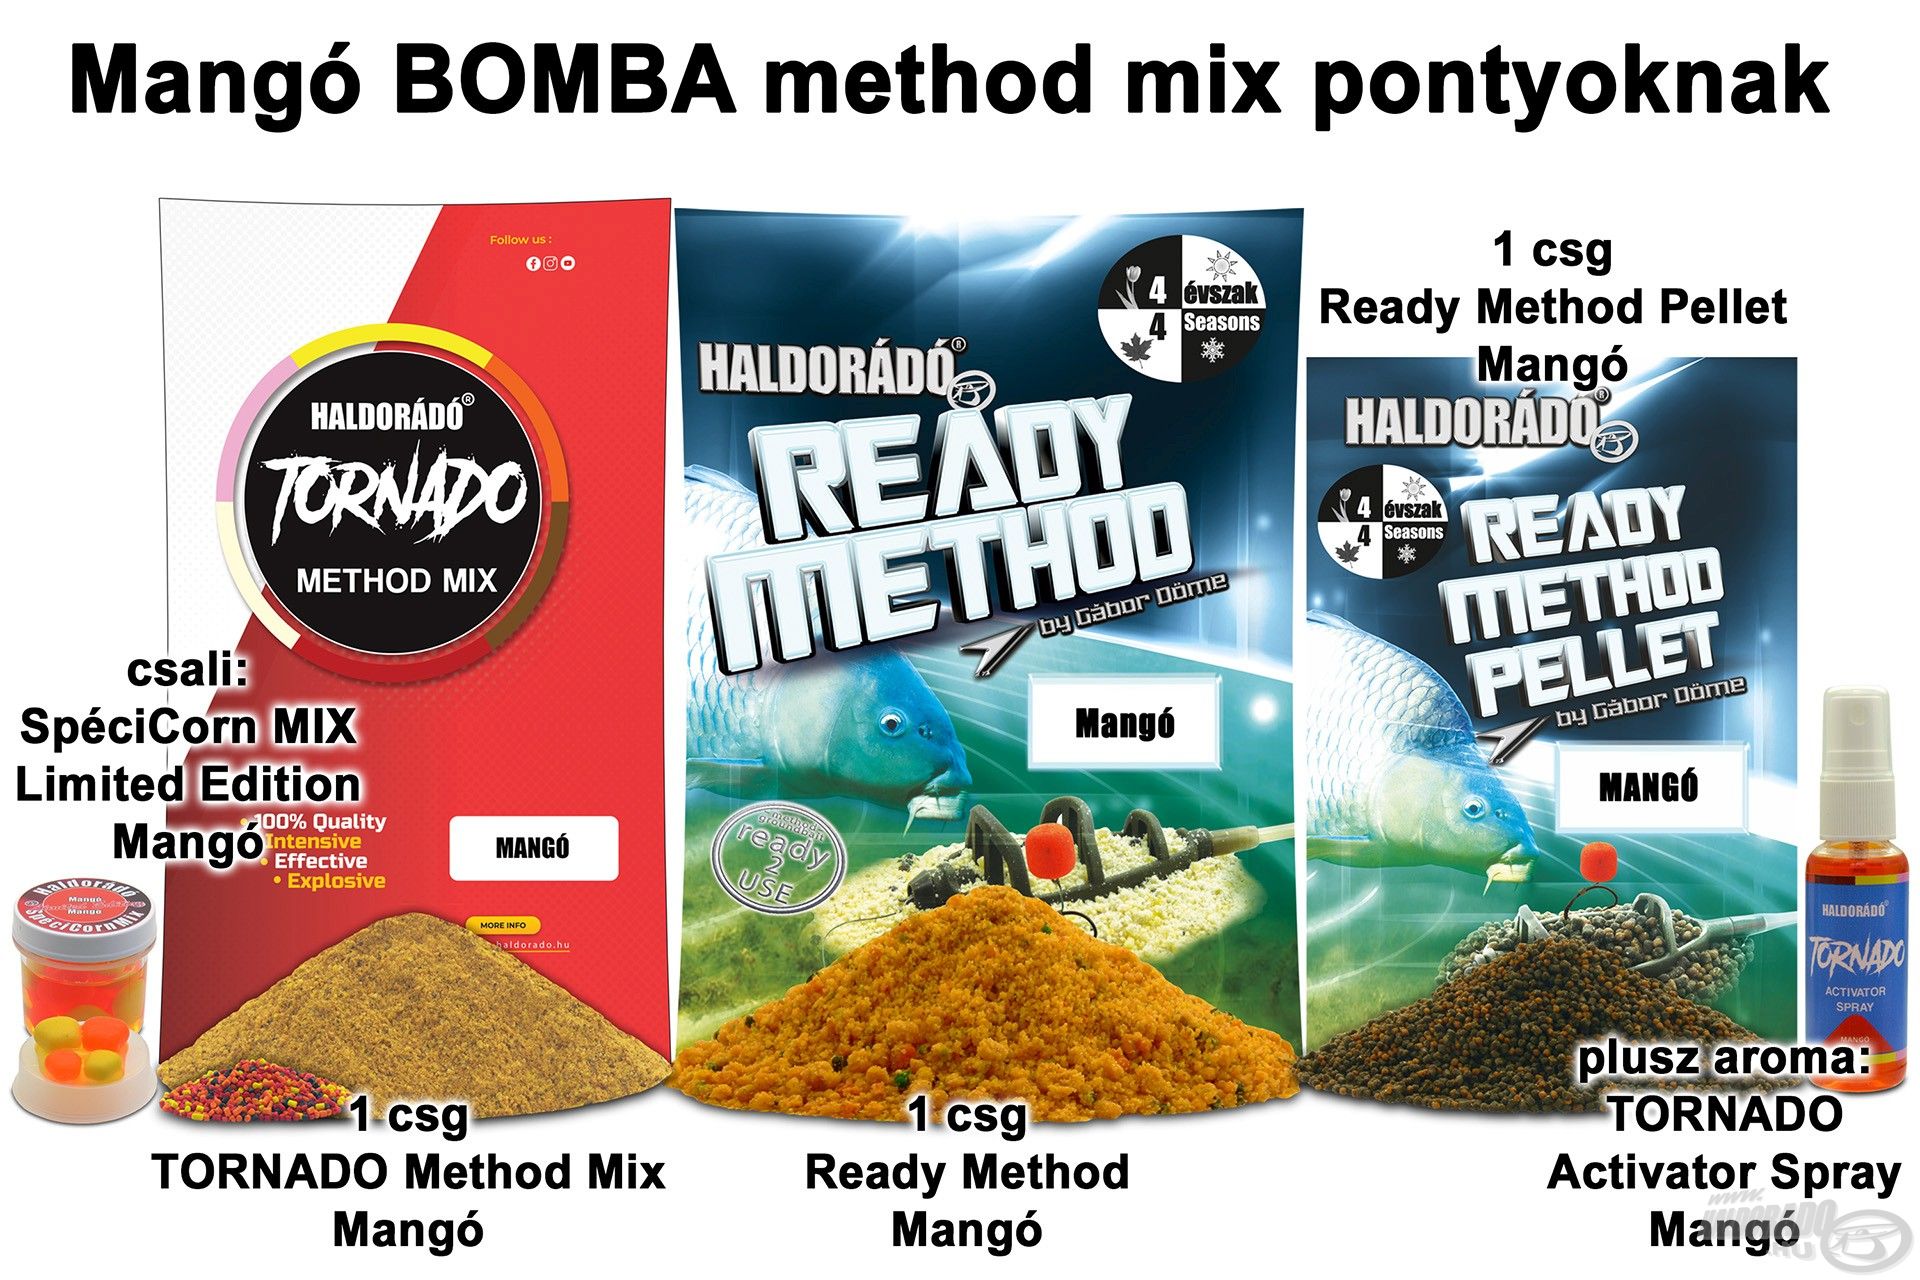 Mangó BOMBA method mix pontyoknak